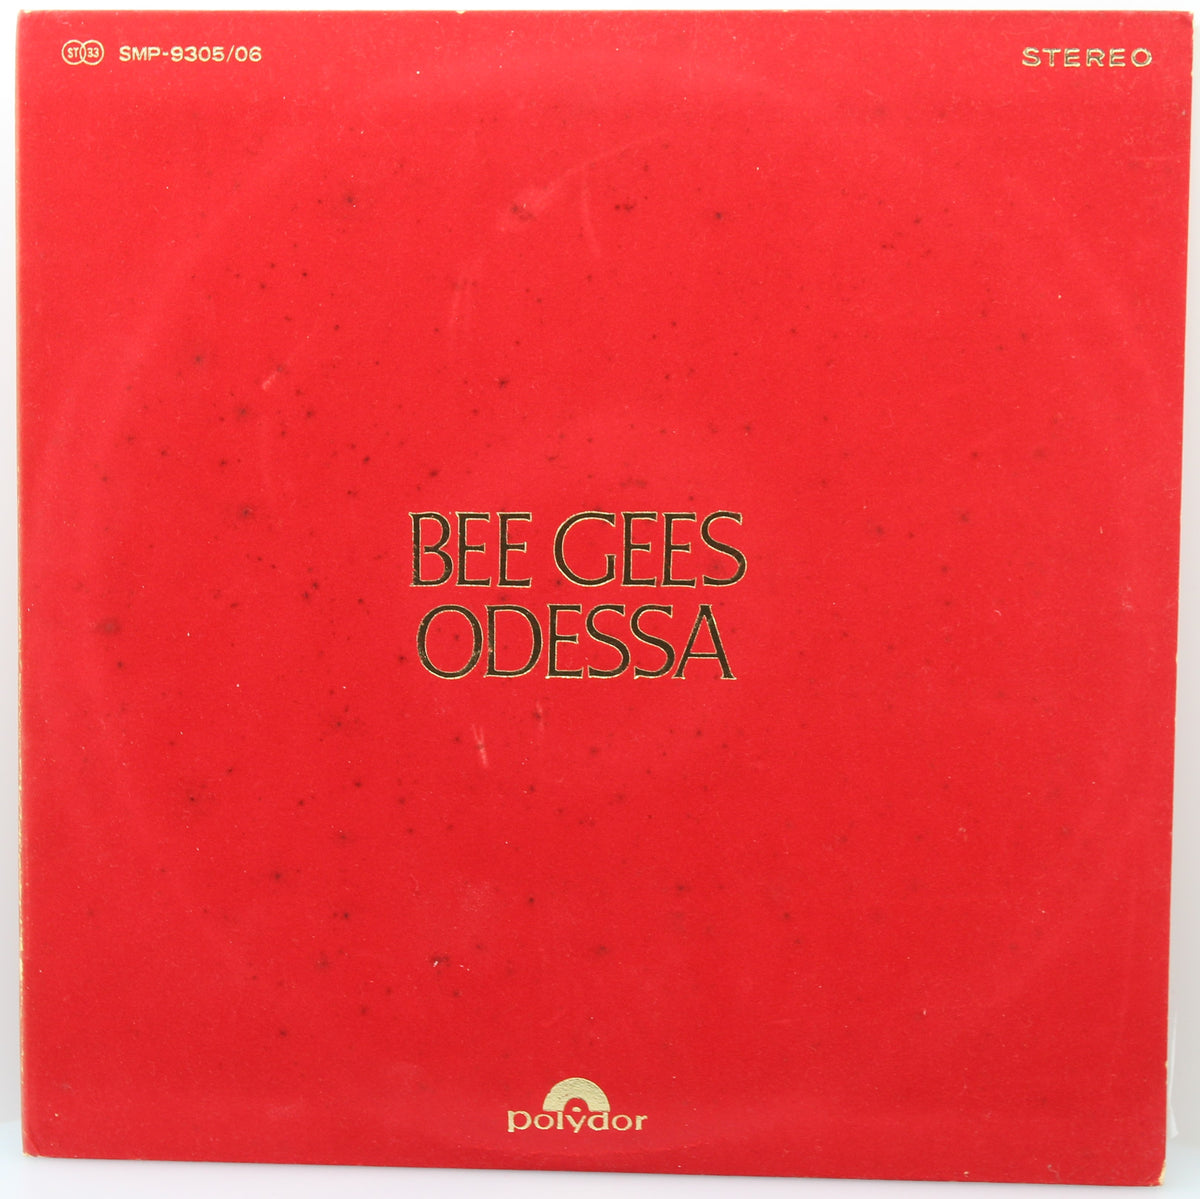 Bee Gees - Odessa, 2 × Vinyl, LP, Album, Promo, Stereo, Japan 1969